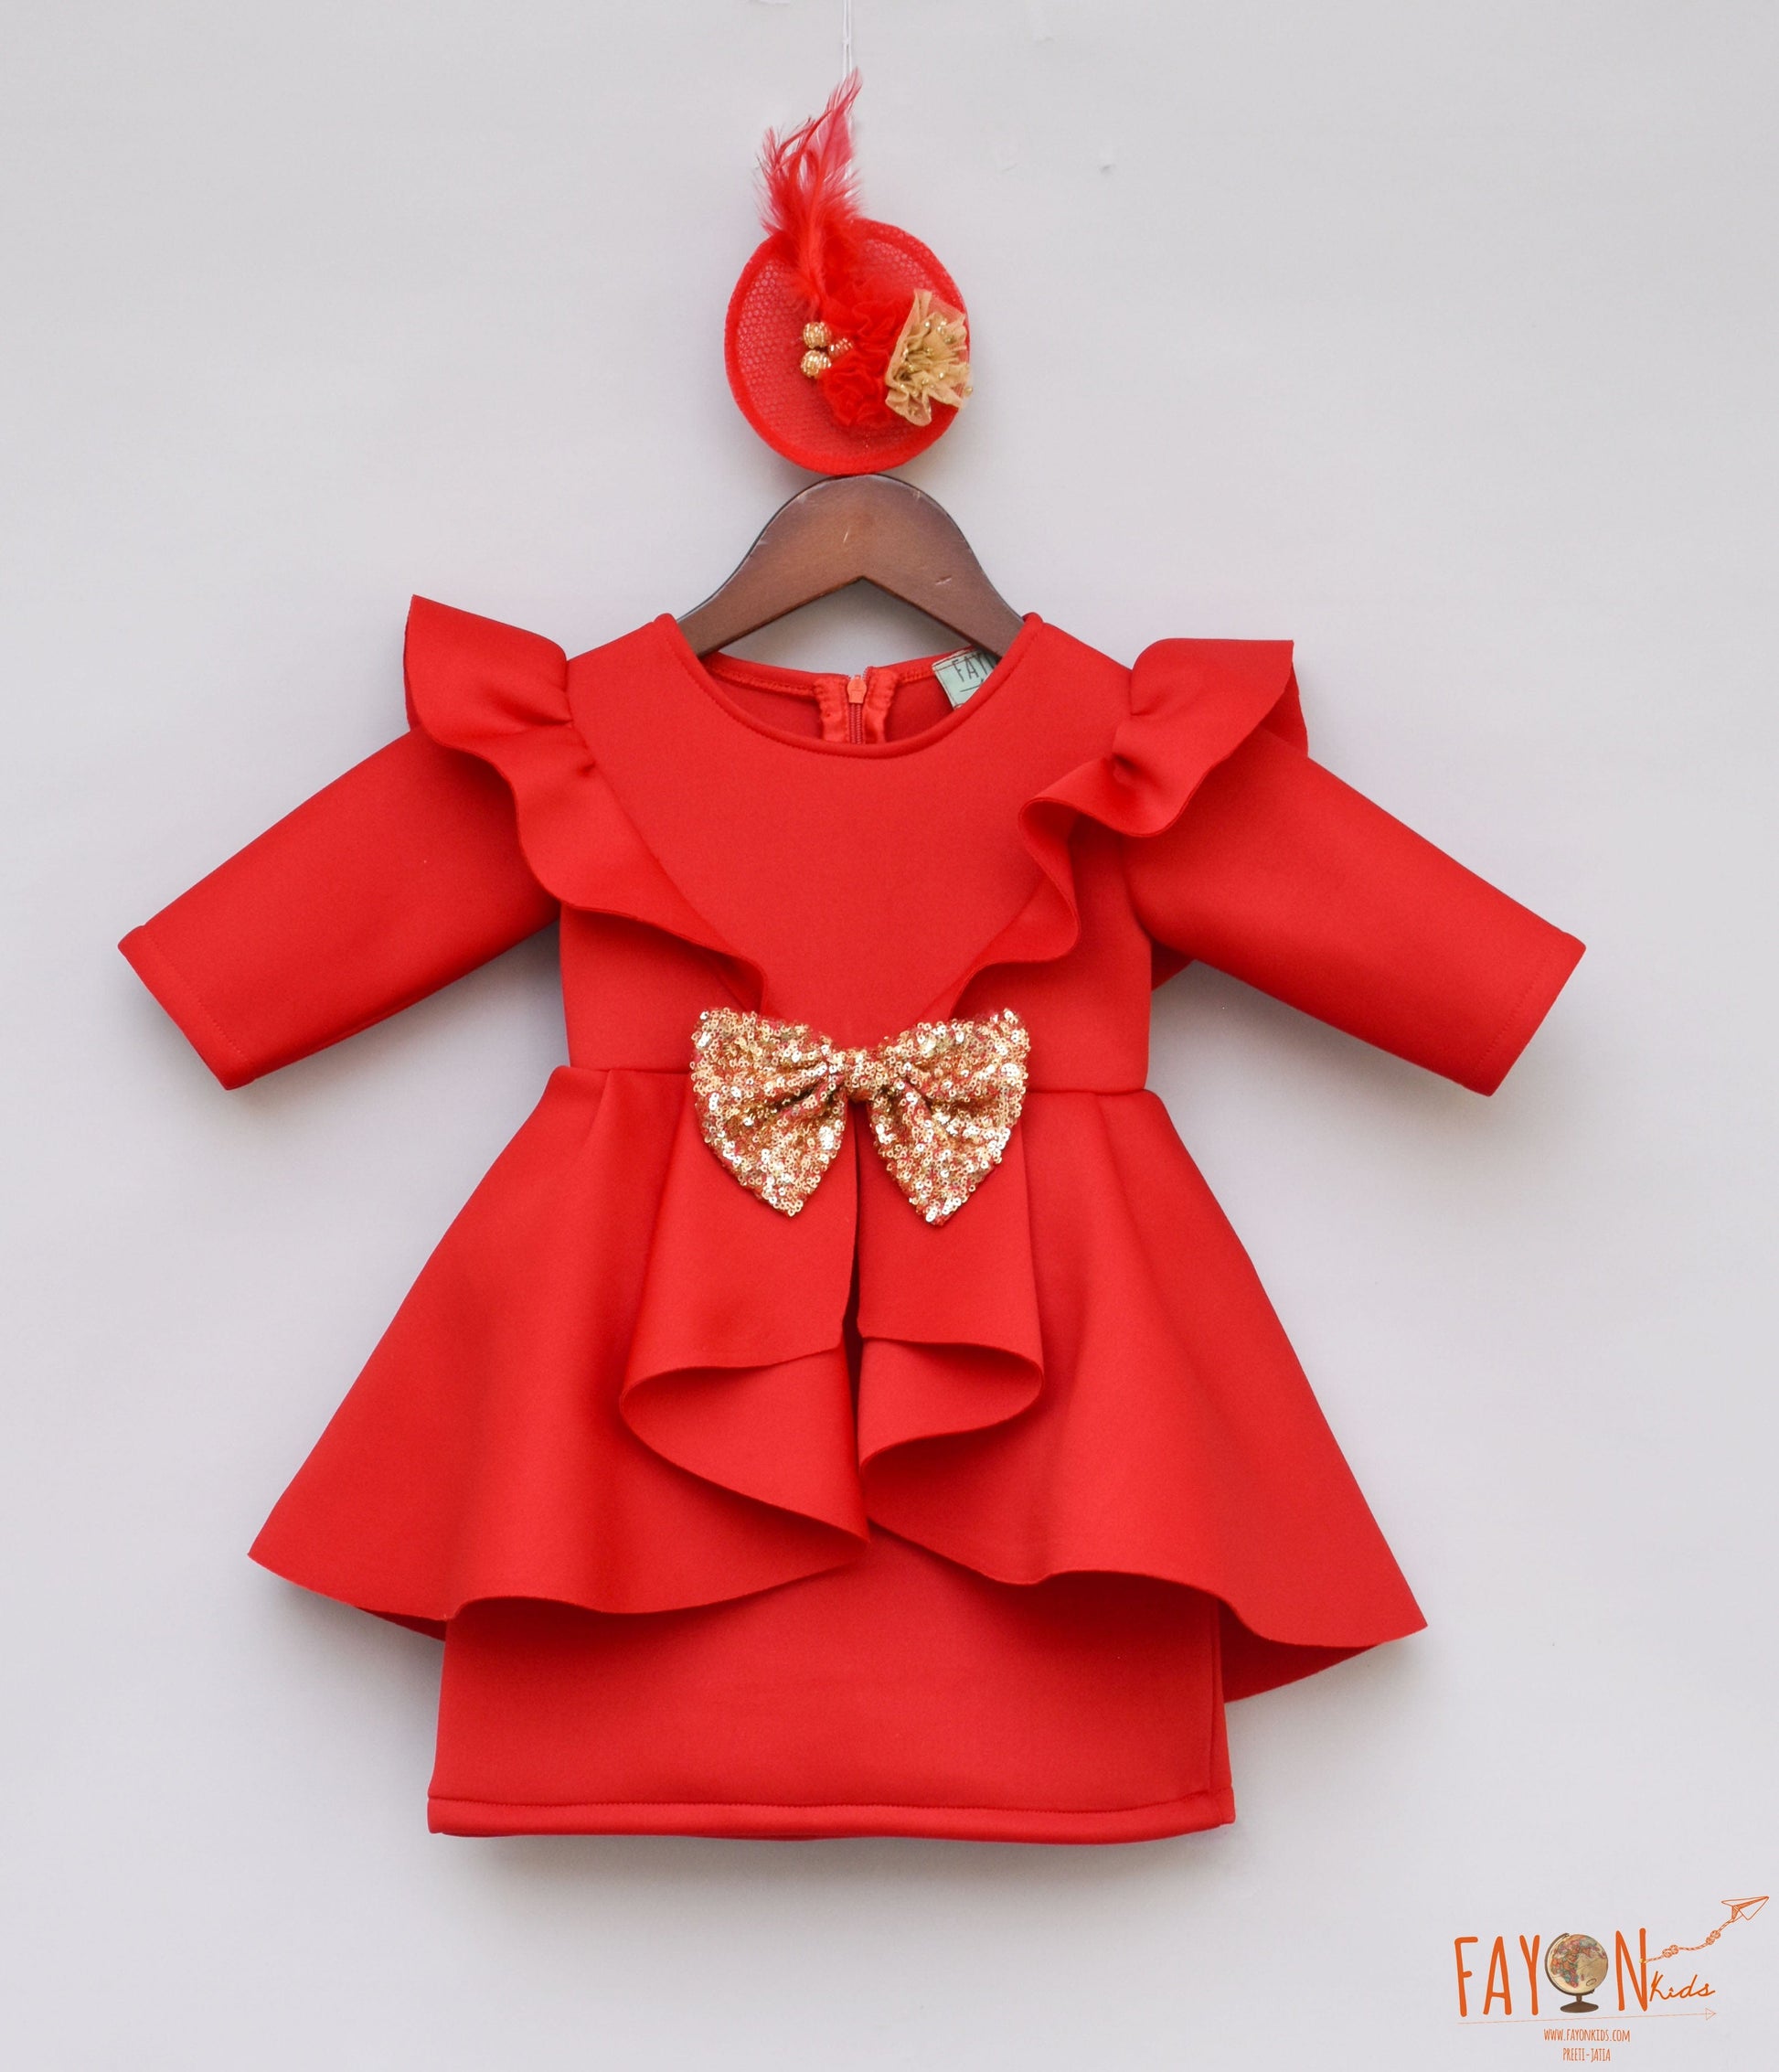 Fayon Kids Red Lace Frock Neoprene Dress Set for Girls